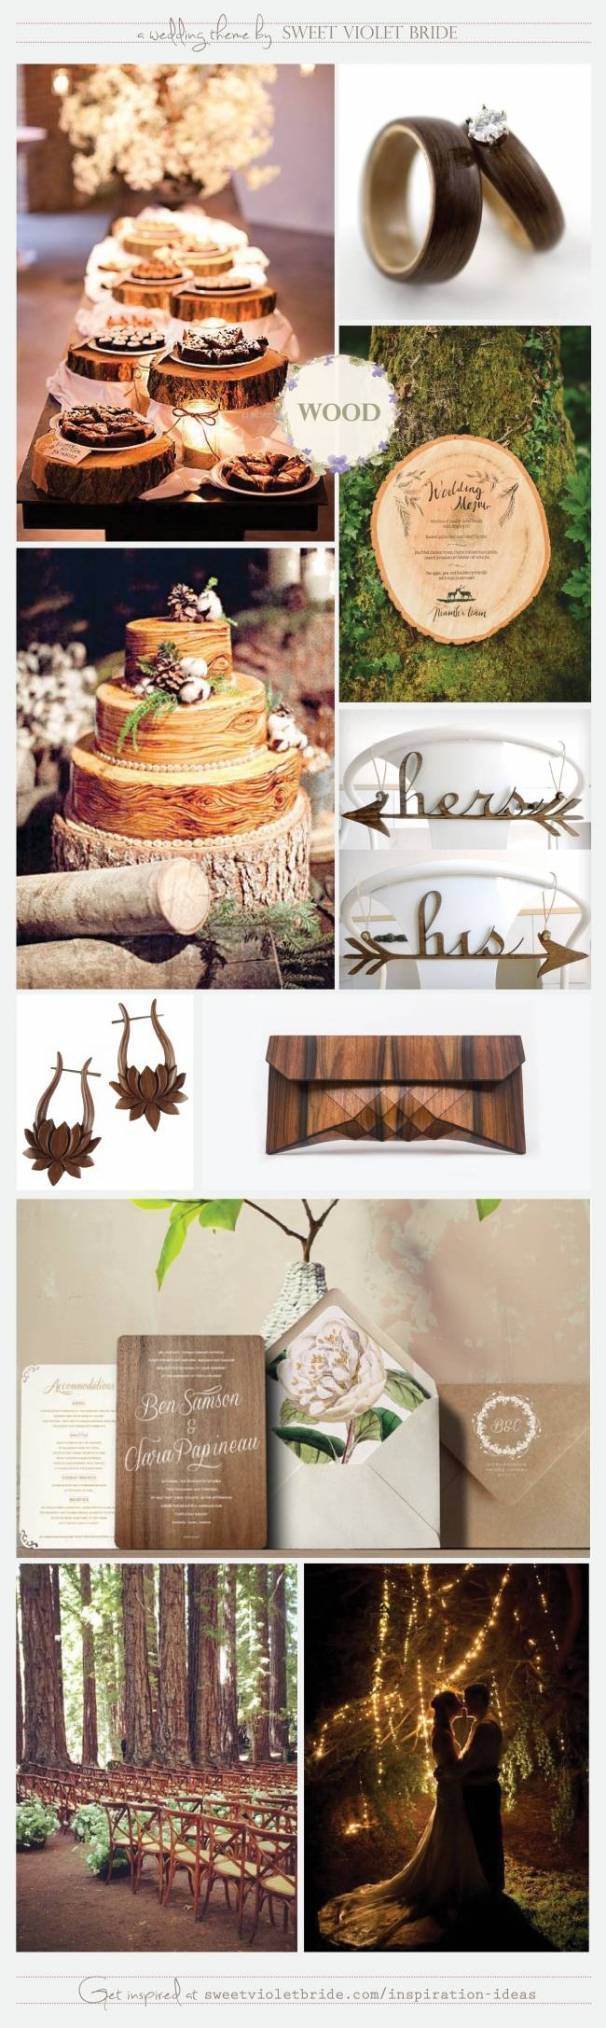 Wedding Inspiration Board #26 Rustic Wood by Sweet Violet Bride